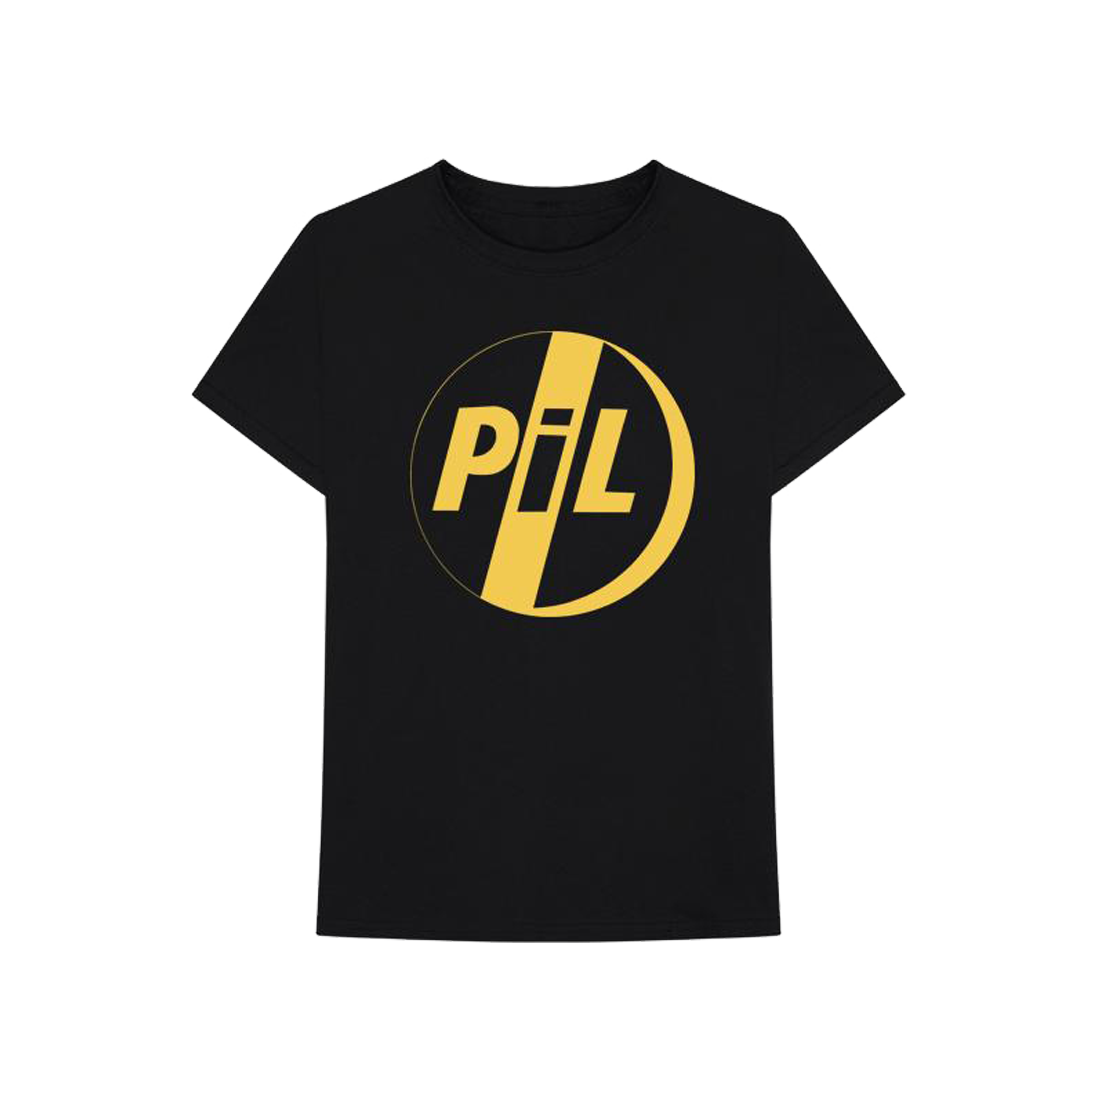 Public Image Ltd - Black and Yellow Logo Tour T-Shirt